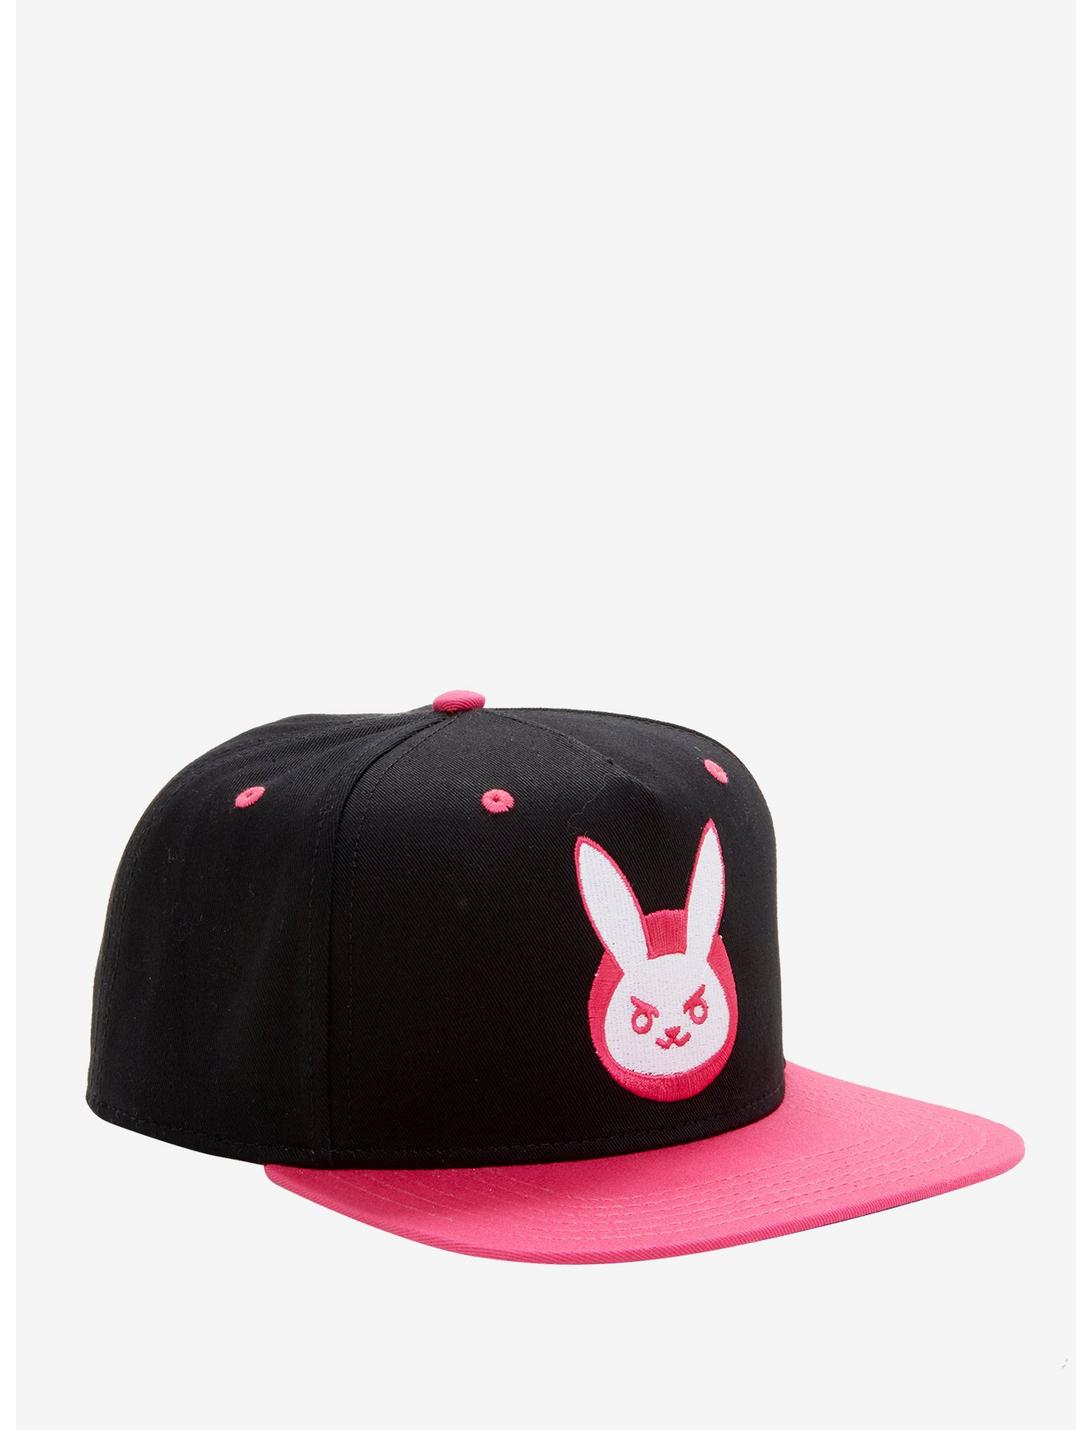 Overwatch D.Va Bunny Logo Snapback Hat, , hi-res